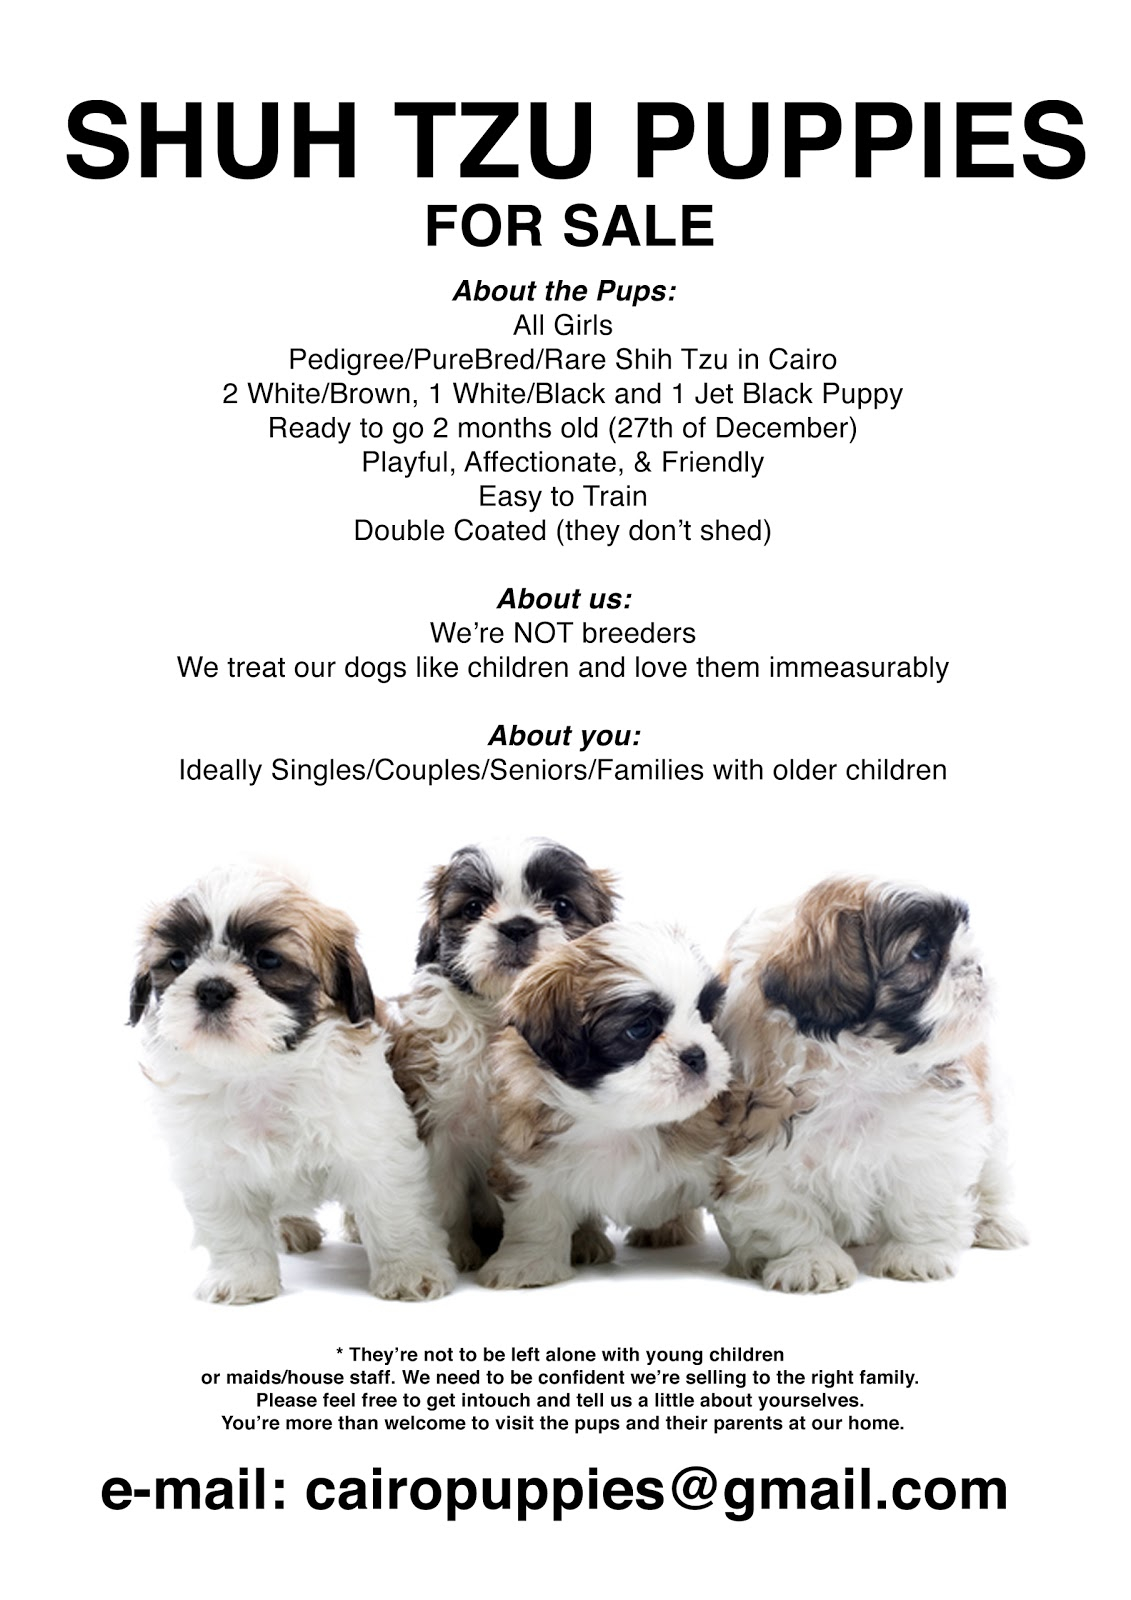 SHIH TZU PUPPIES FOR SALE: Flyer & Info Inside Puppies For Sale Flyer Template With Puppies For Sale Flyer Template